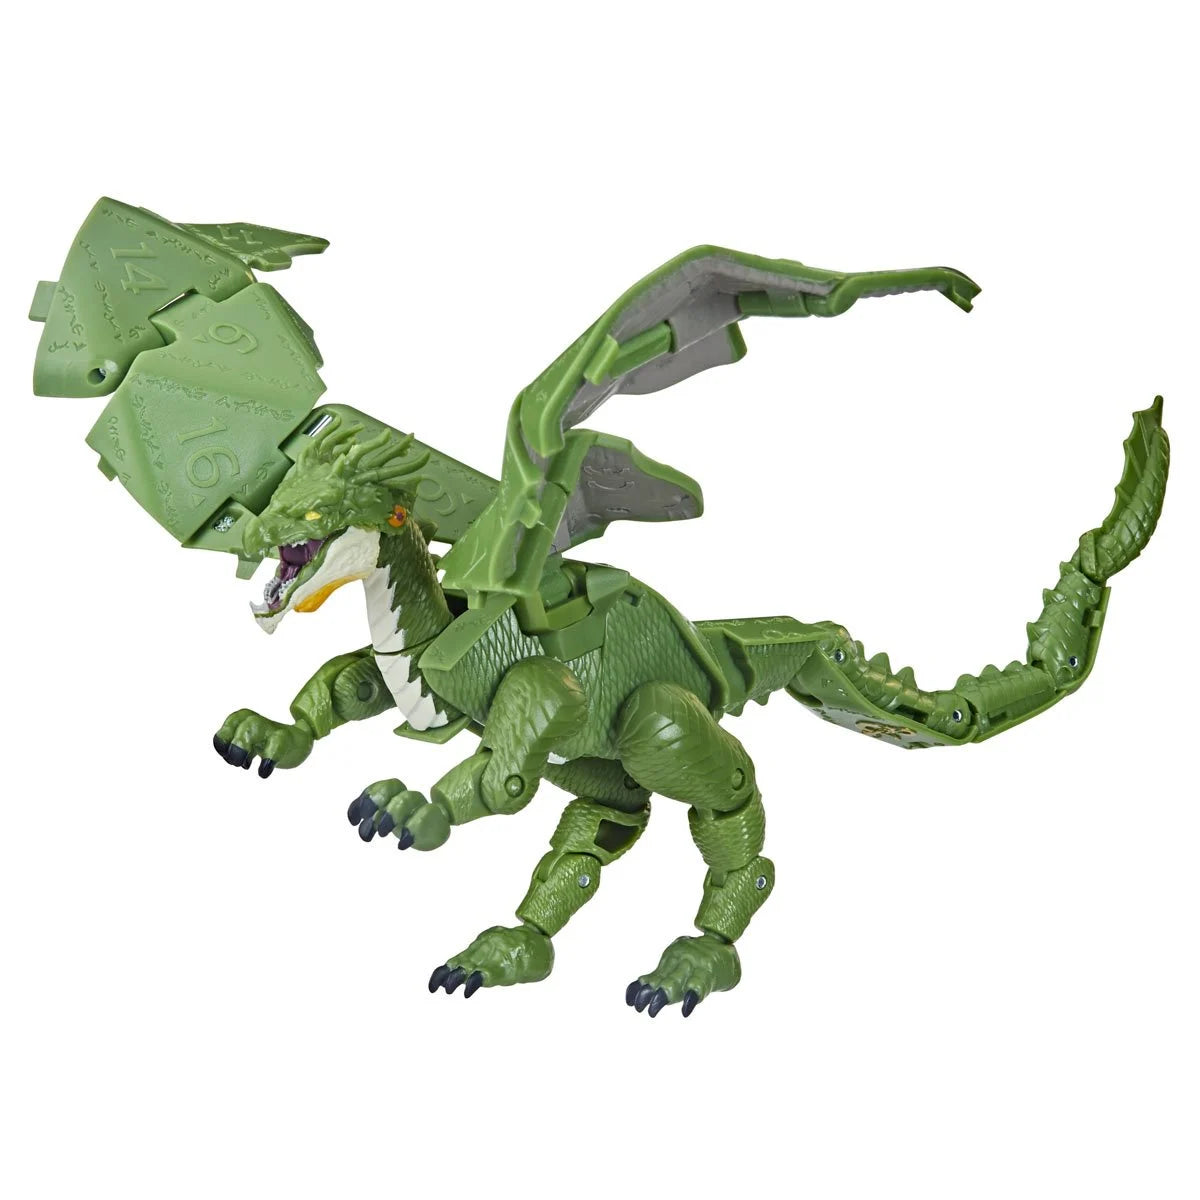 D&D Dicelings Green Dragon Converting Figure - Heretoserveyou